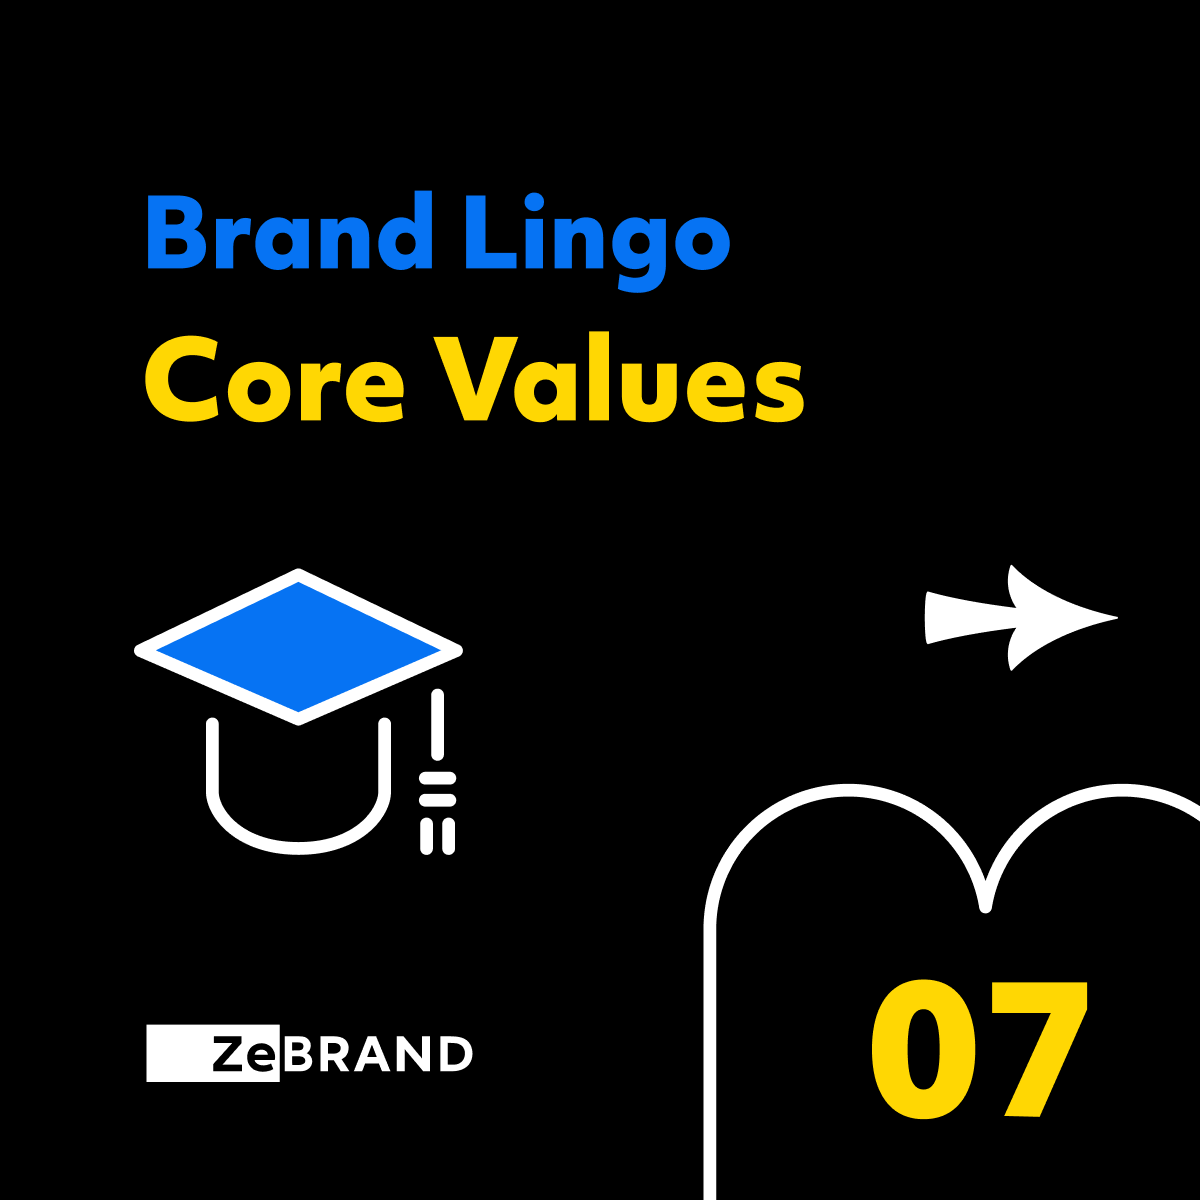 Brand Lingo Core Values